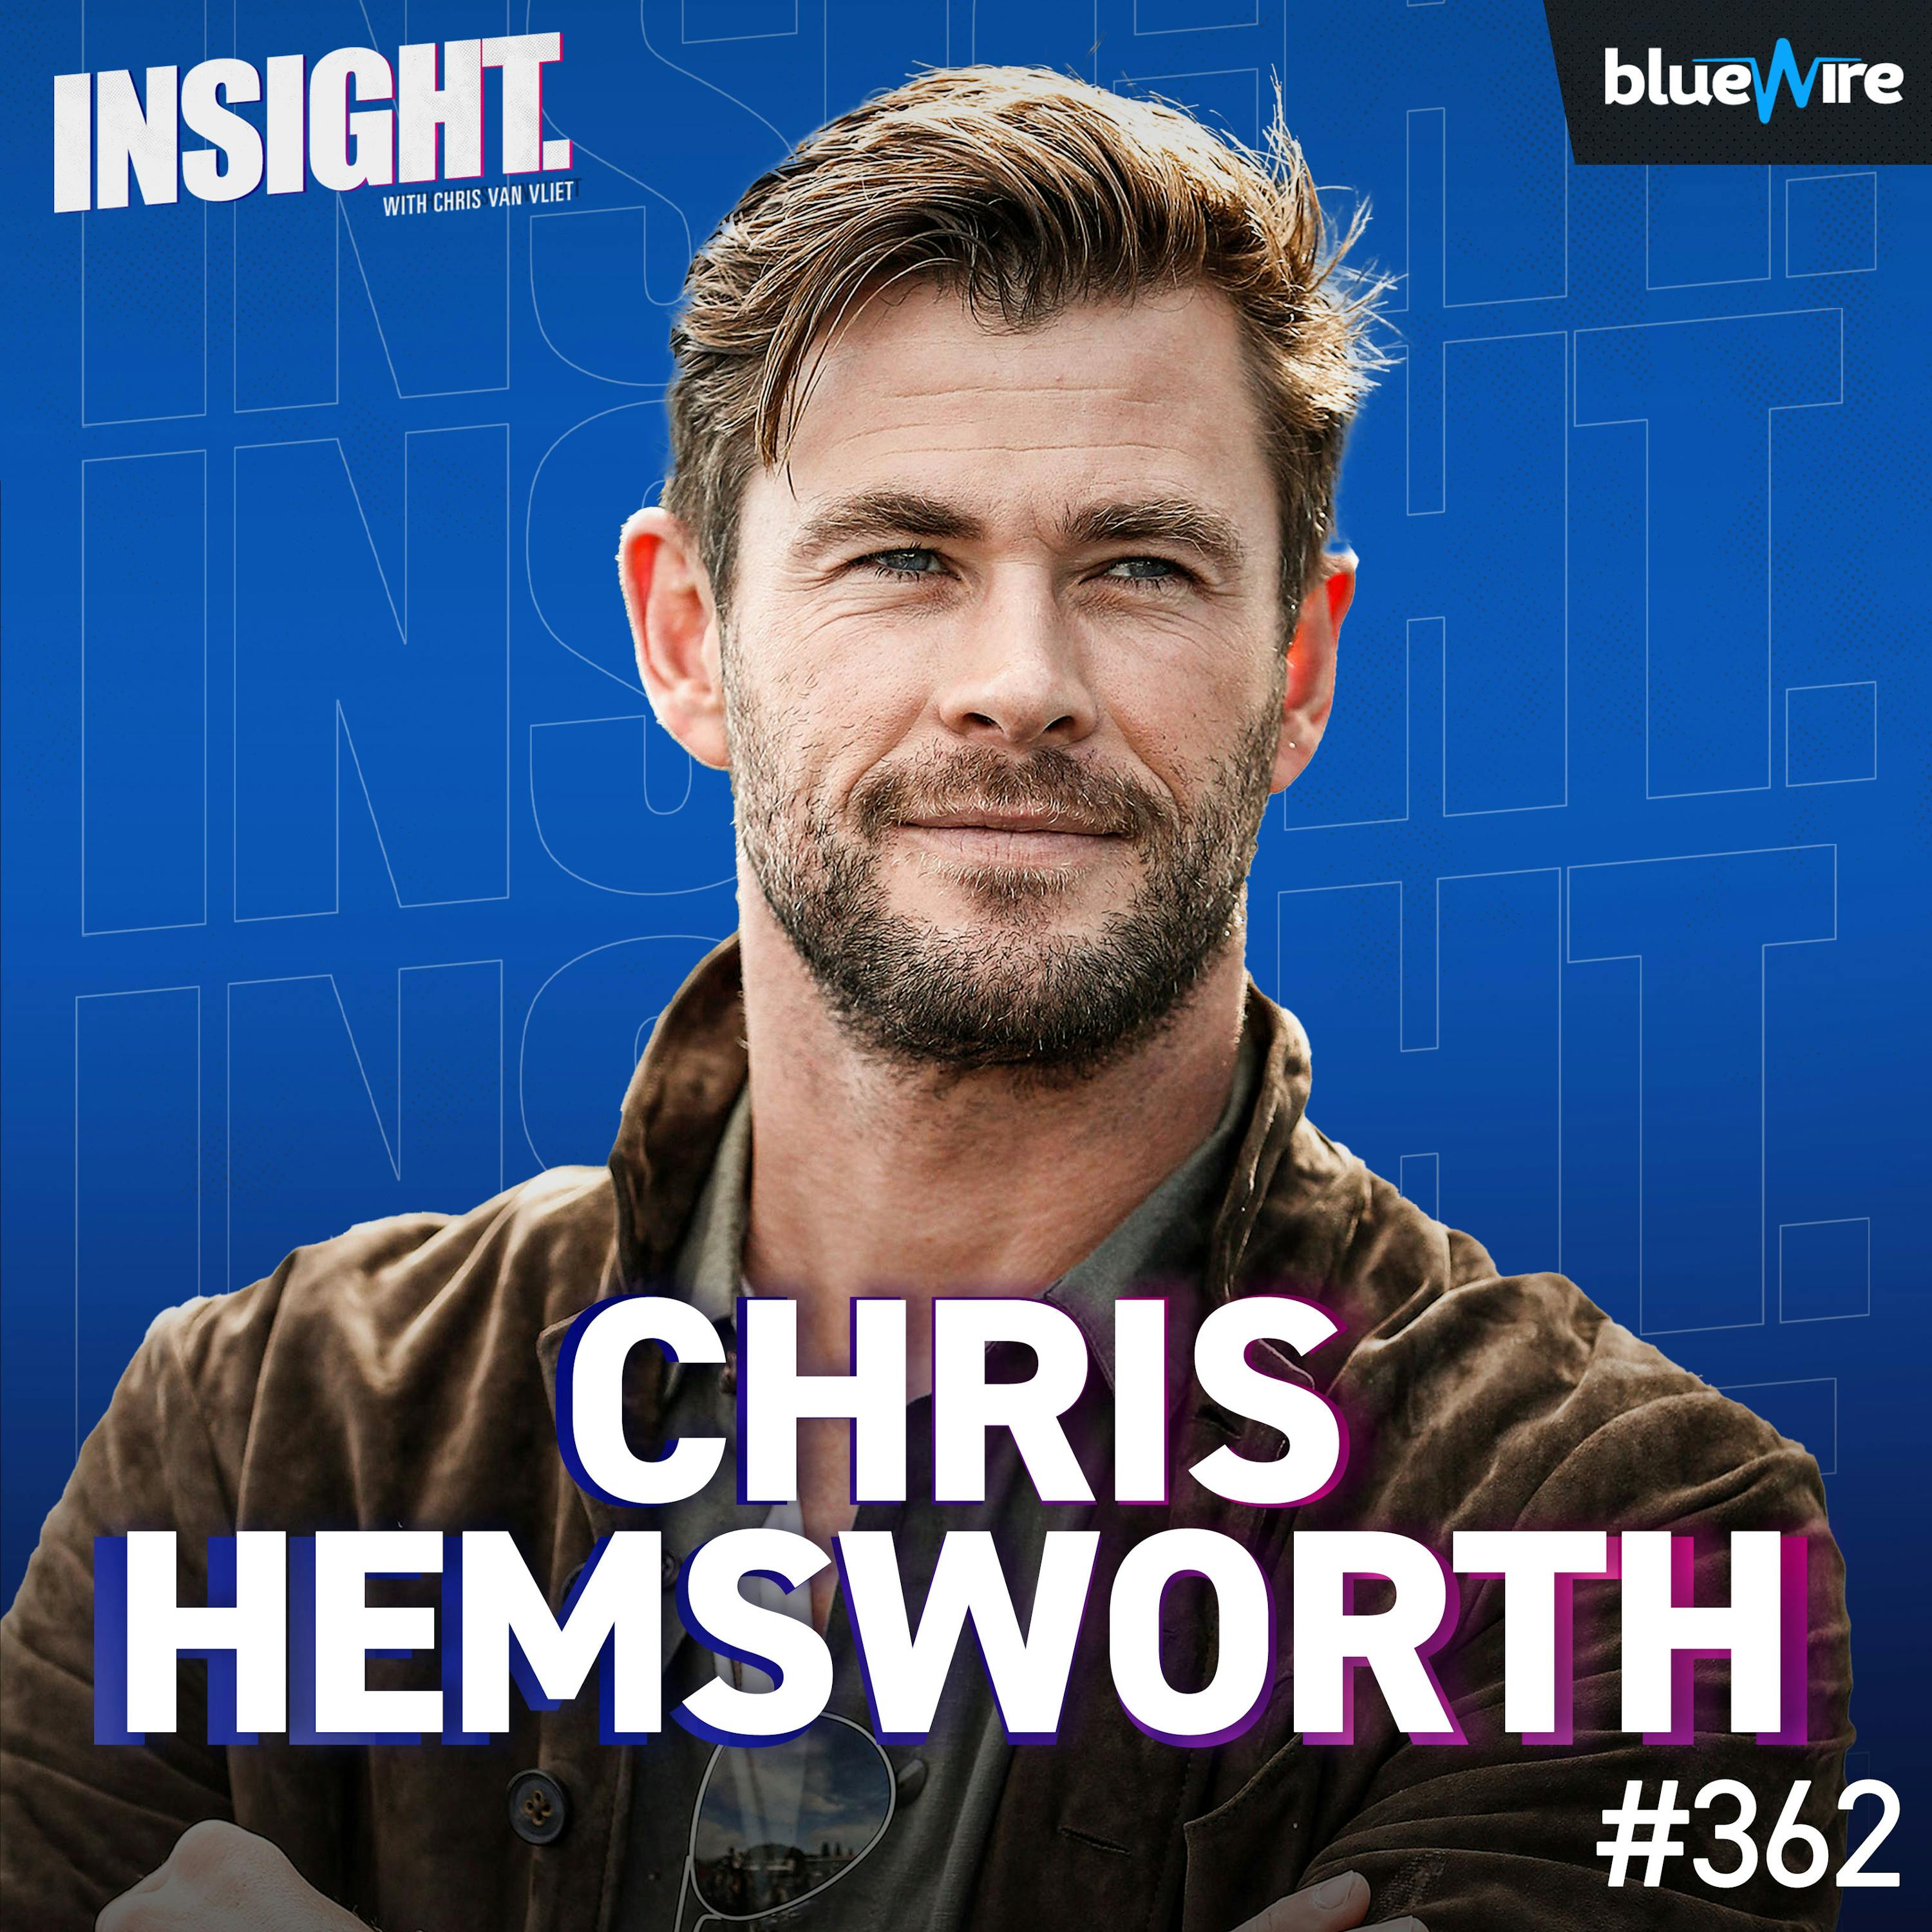 Chris Hemsworth On The Role That Changed His Life, Playing Hulk Hogan, Spiderhead on Netflix